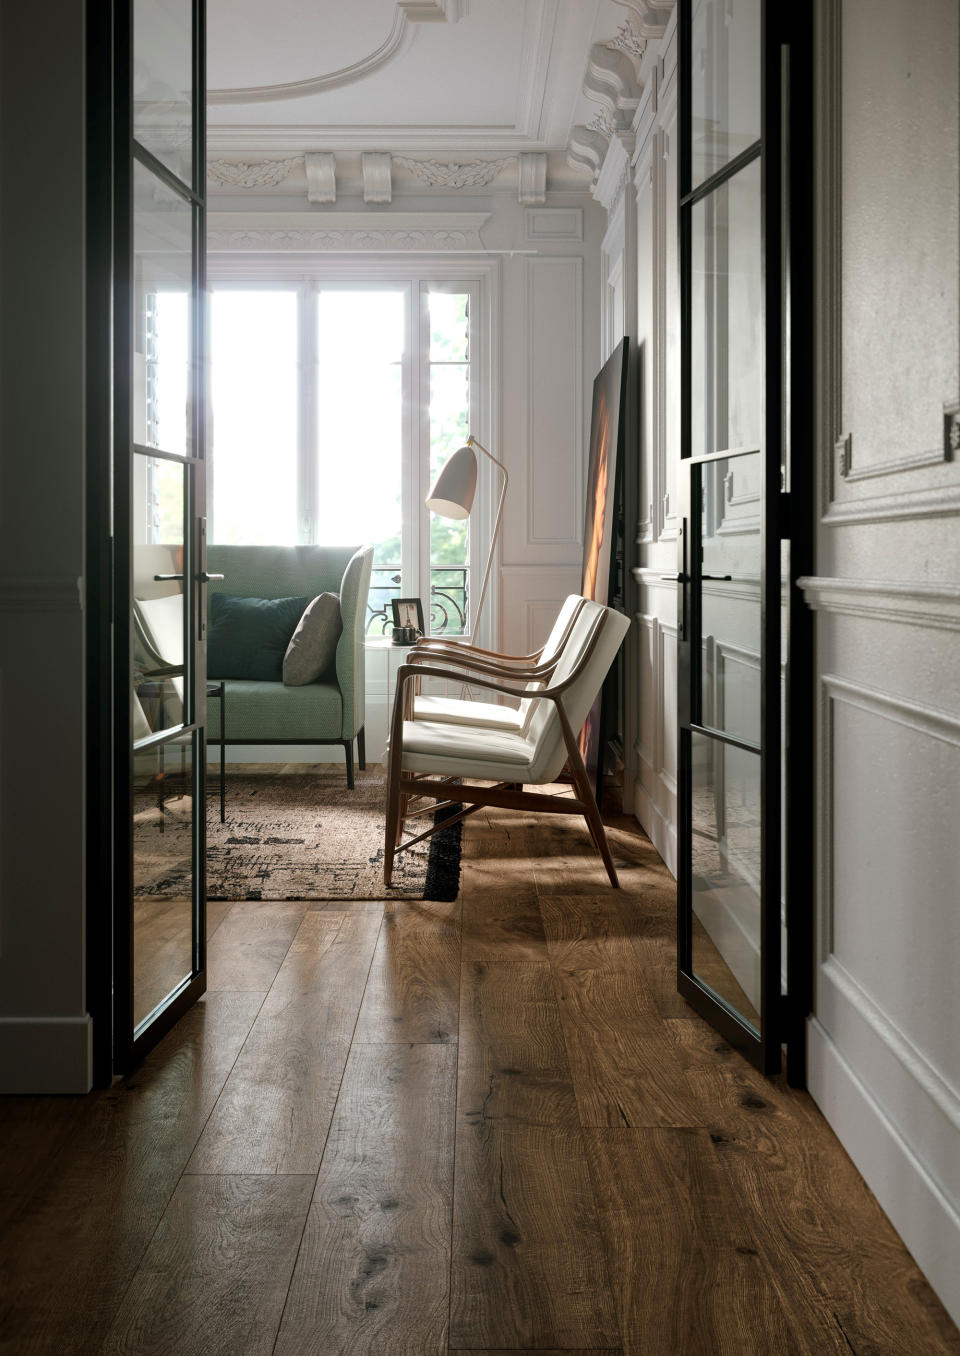 Lapicida Chianti Rovere wood effect floor tiles